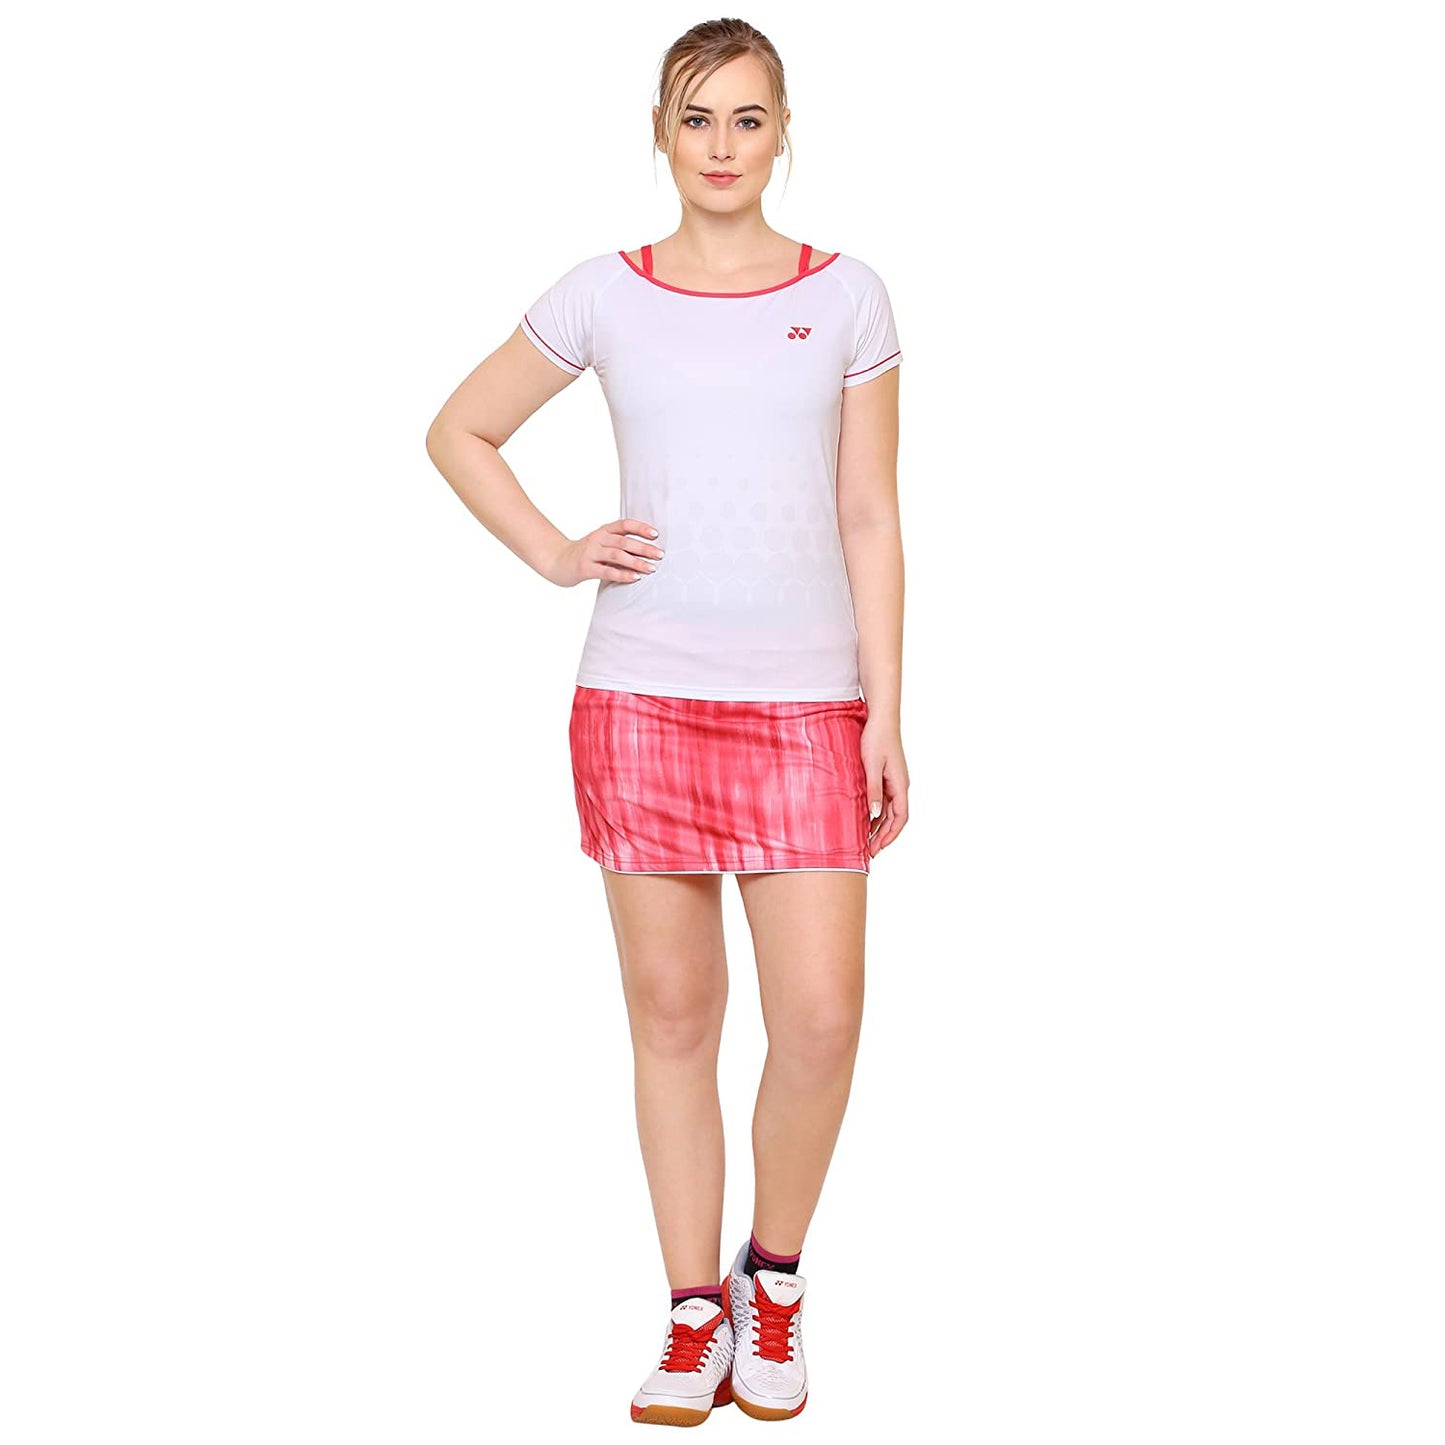 Yonex 905 Skirt for Women, Raspberry - Best Price online Prokicksports.com